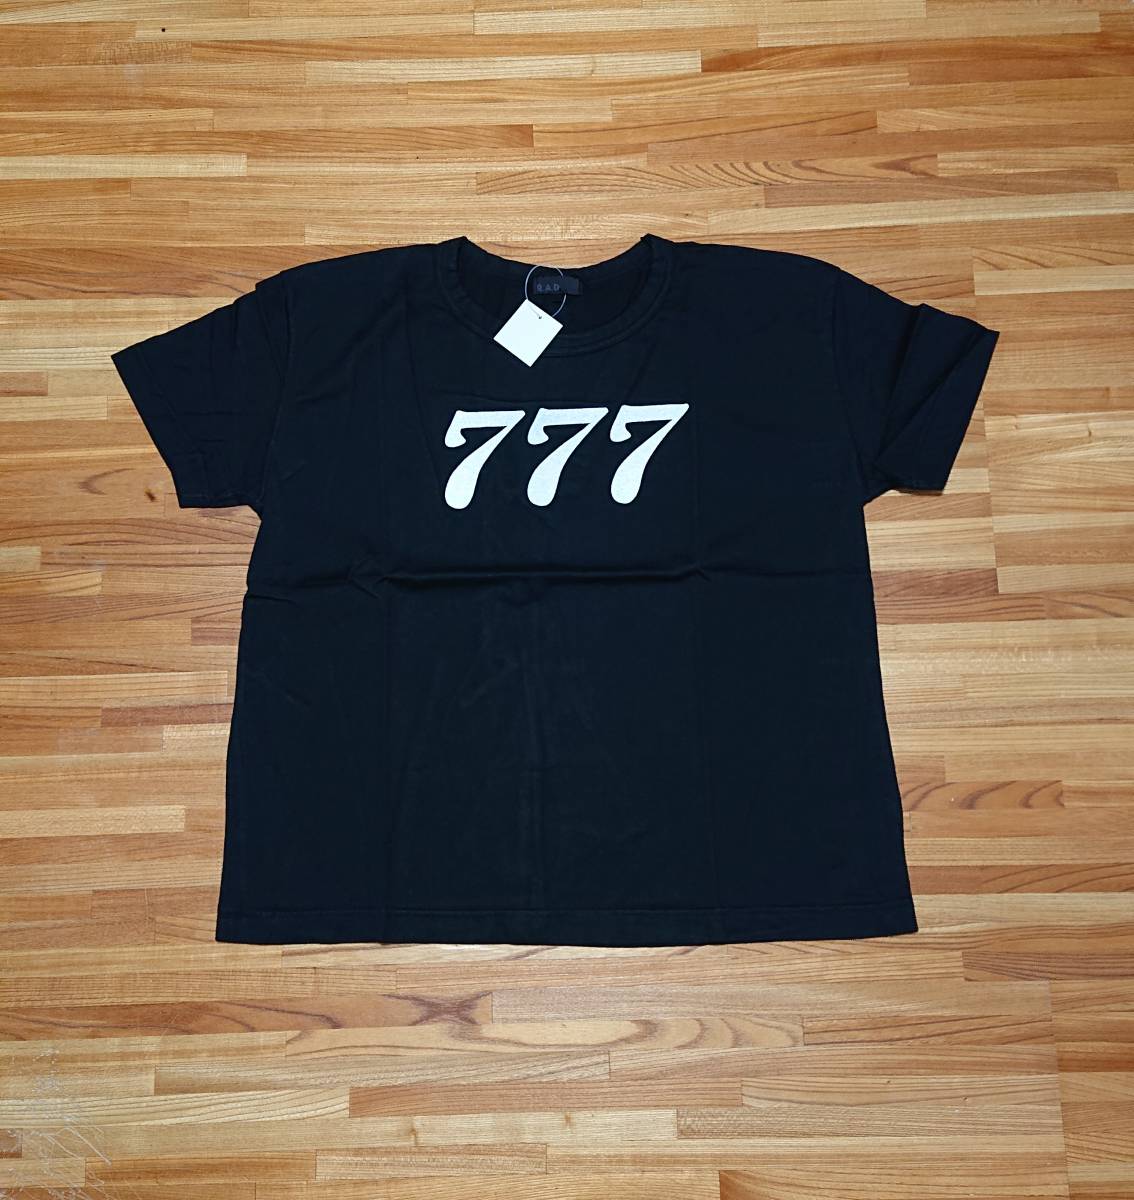 R.A.D ドラマGTO 反町隆史着用 777Tシャツ スリーセブン BLACK フリーサイズ 新品未使用 激レア